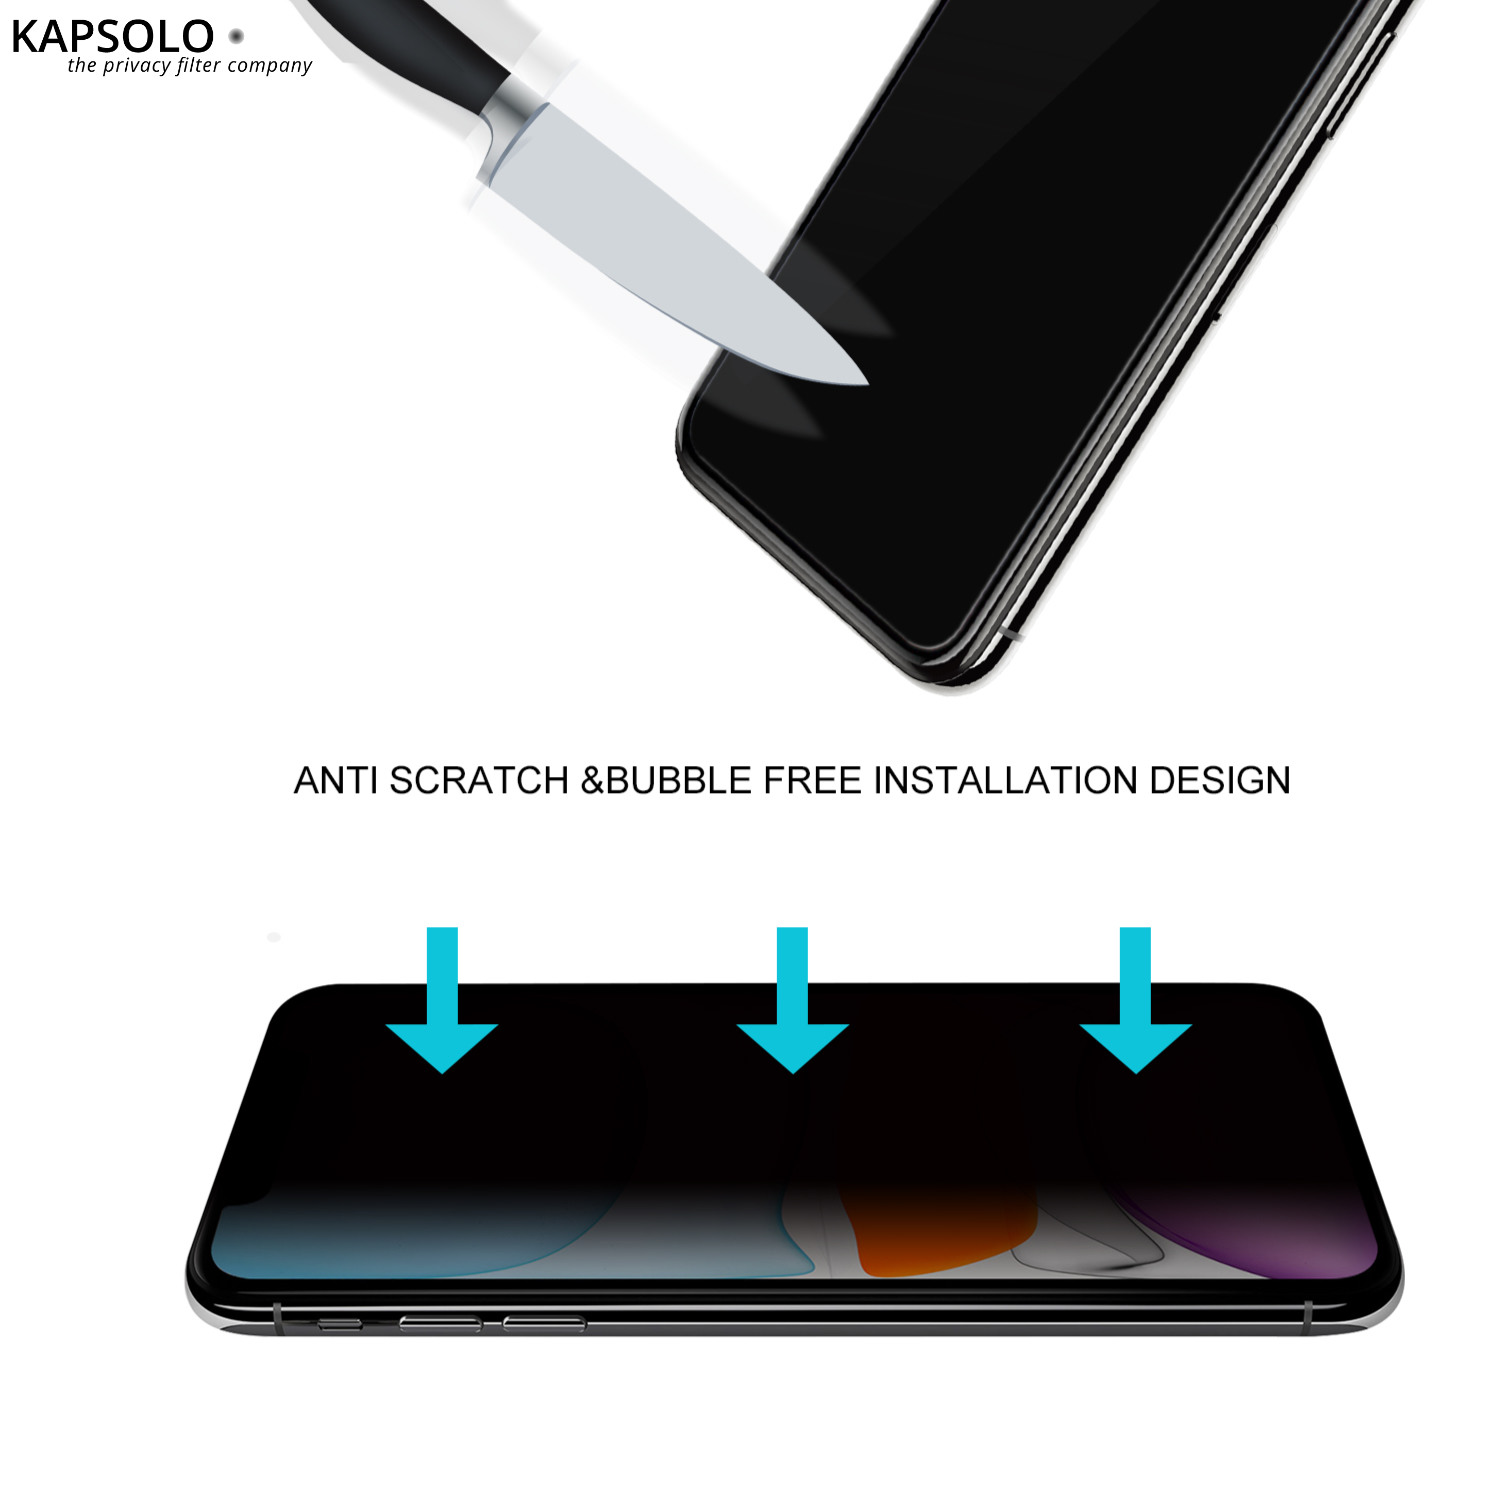 KAPSOLO Verre Trempé Anti Espion KAP30293 Apple iPhone 8 Plus